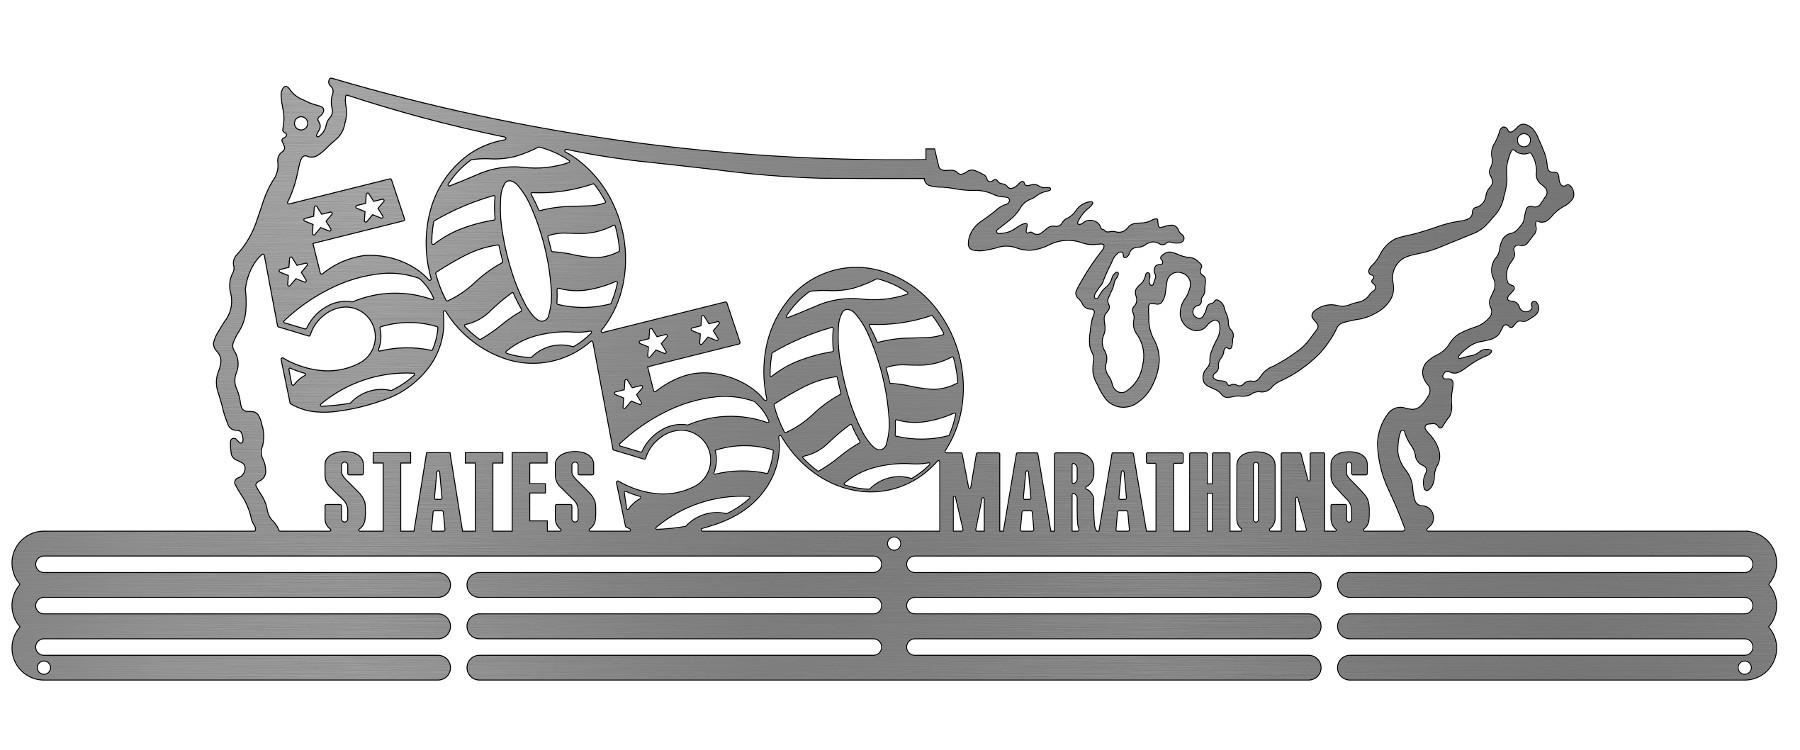 50 States 50 Marathons